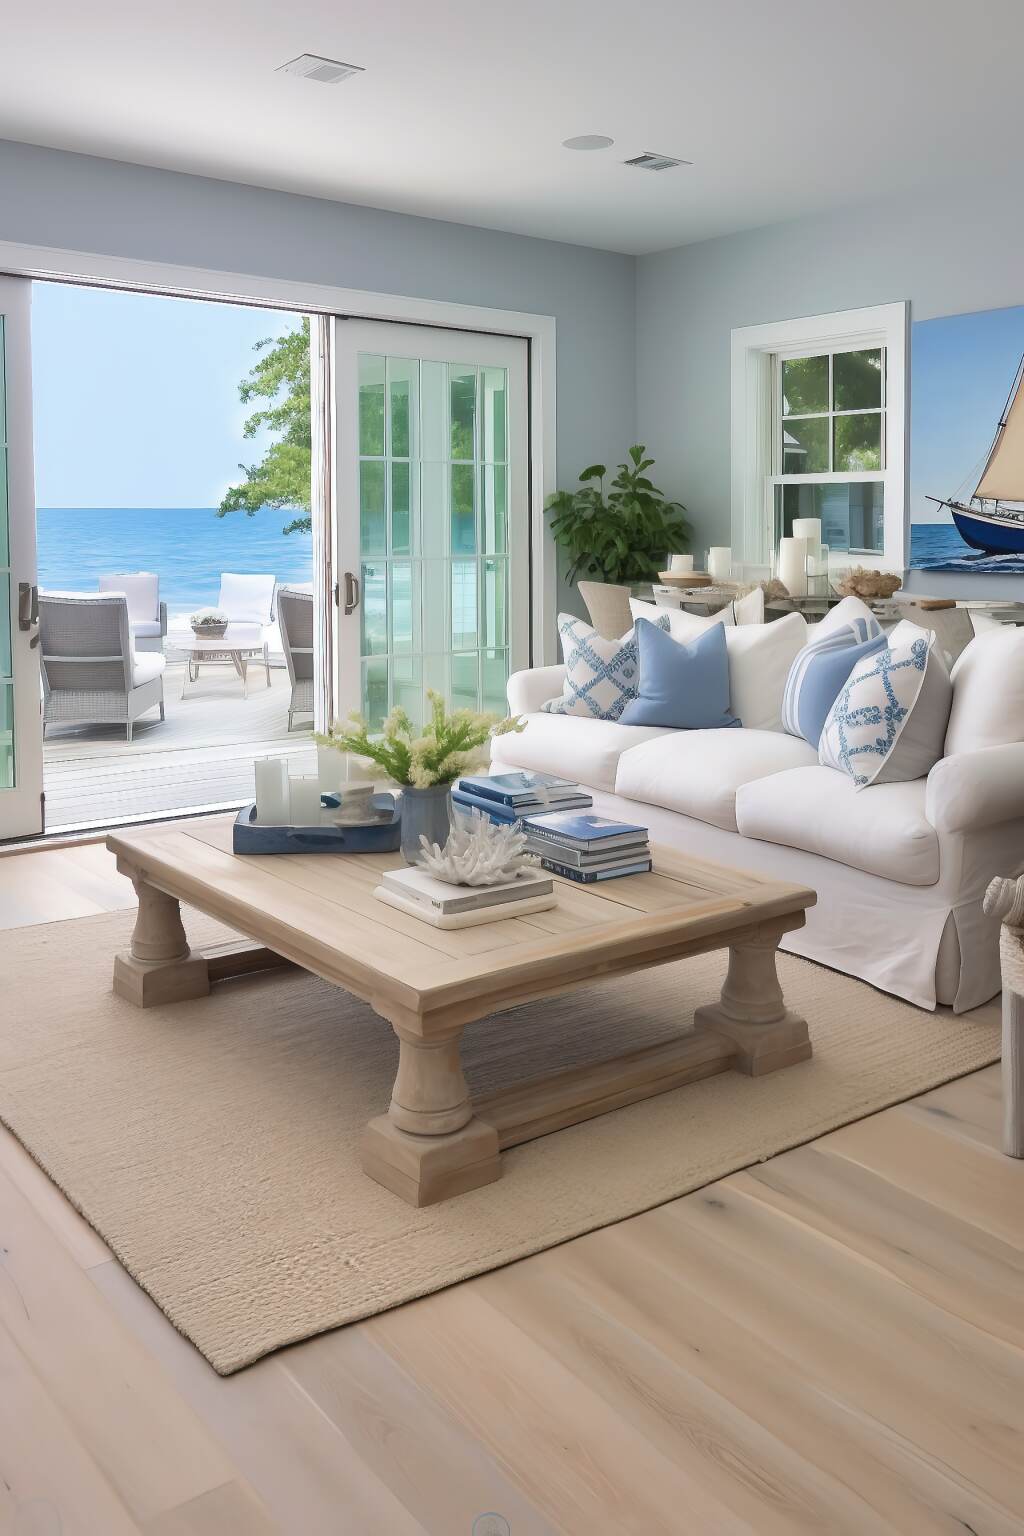 Coastal Themed Living Room Featuring Whitewashed Oak